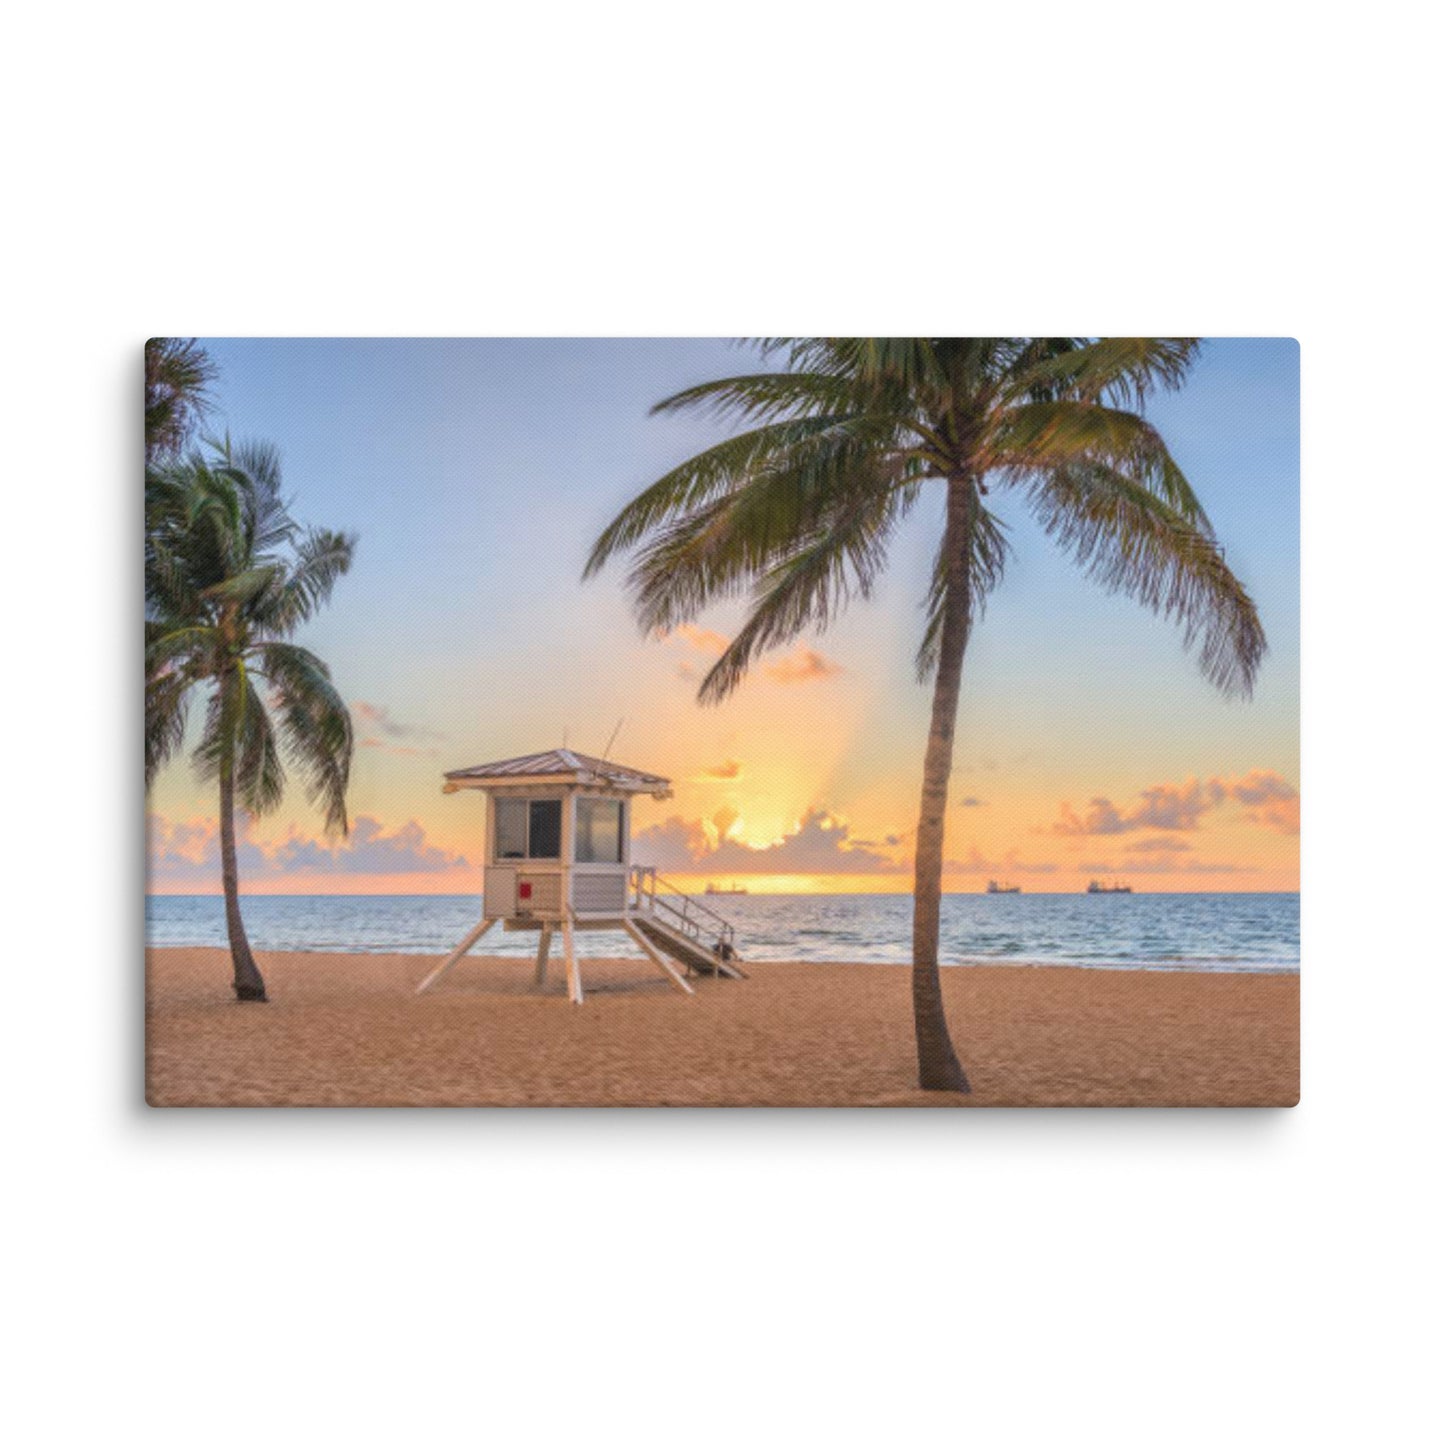 Sunrise Sentinel Coastal Beach Landscape Photograph Canvas Wall Art Print